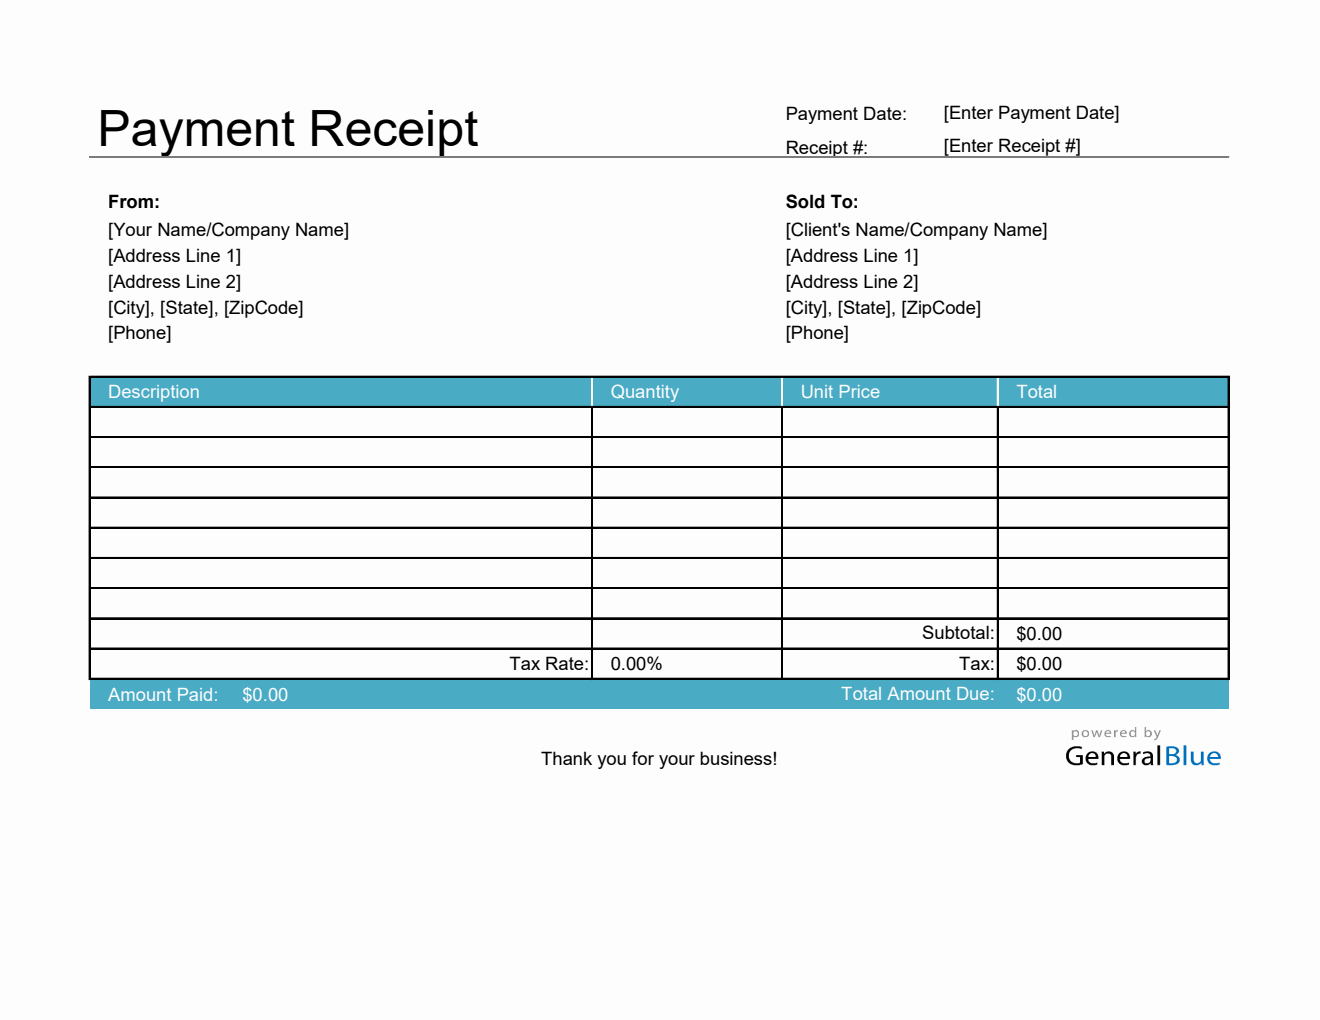 Payment Receipt Template in Excel (Aqua)